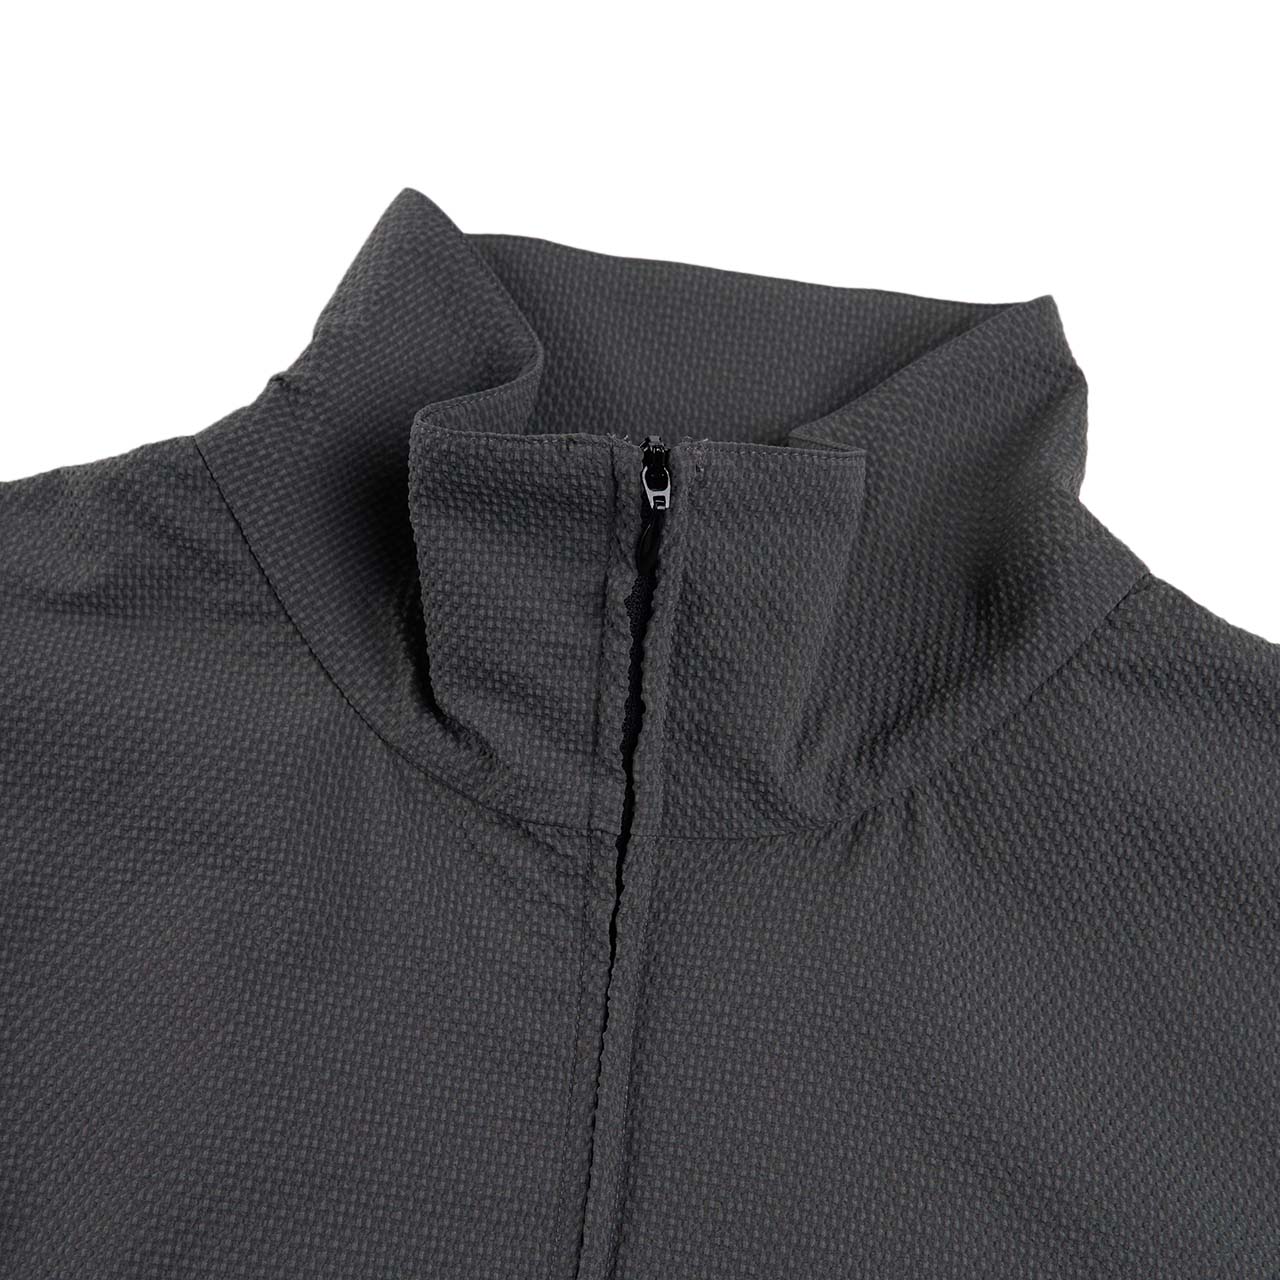 affxwrks balance jacket (grey seersucker)